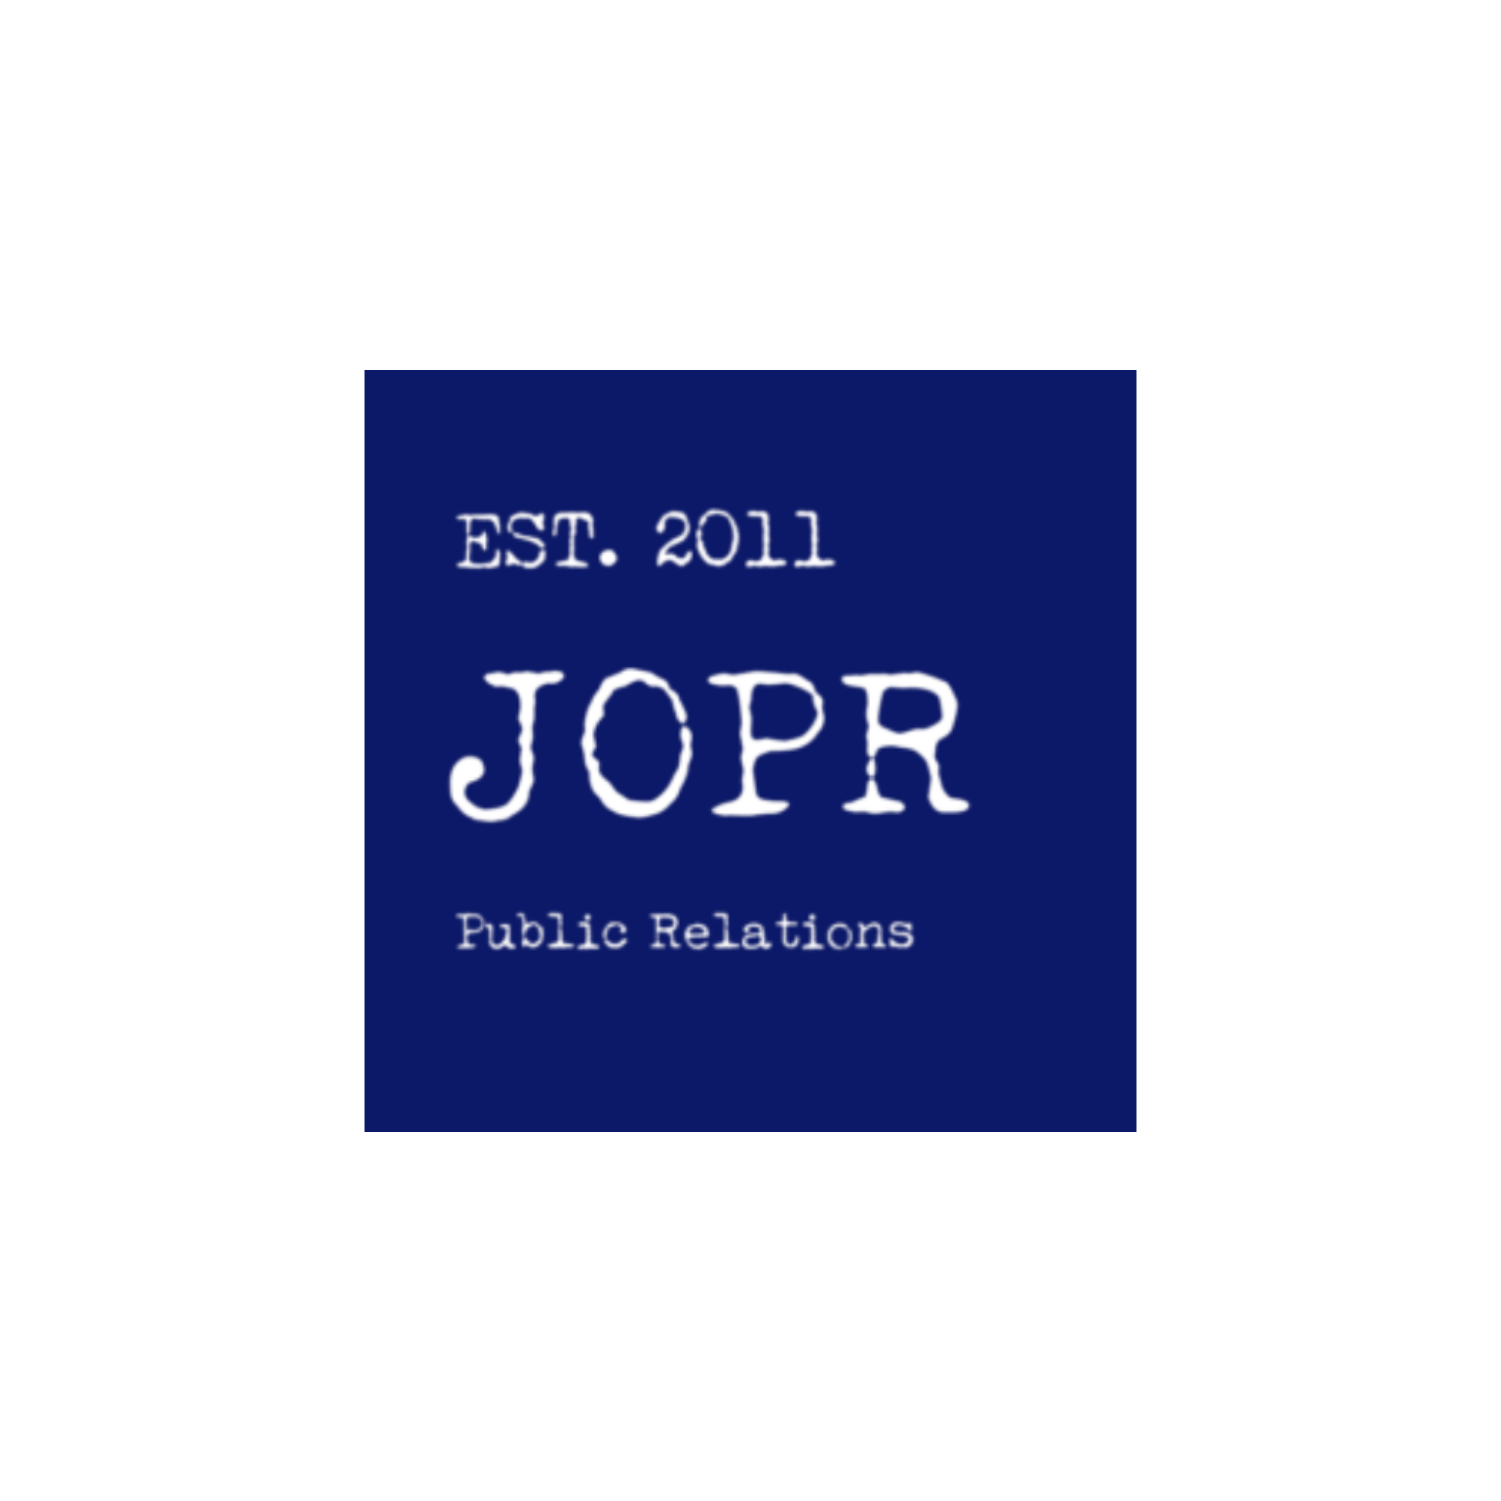 JOPR Public Relations